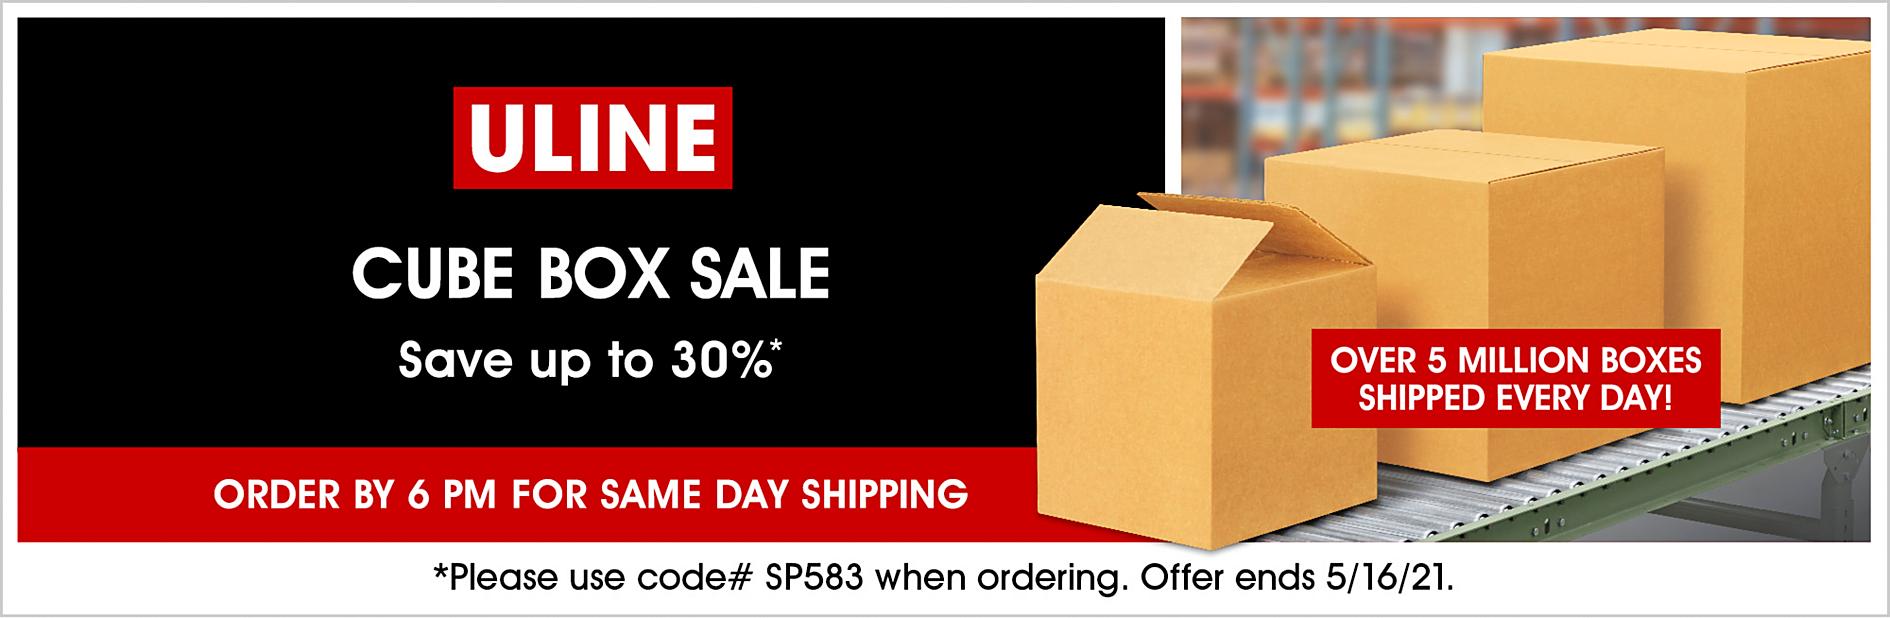 Uline 2021 Uline Cube Box Sale